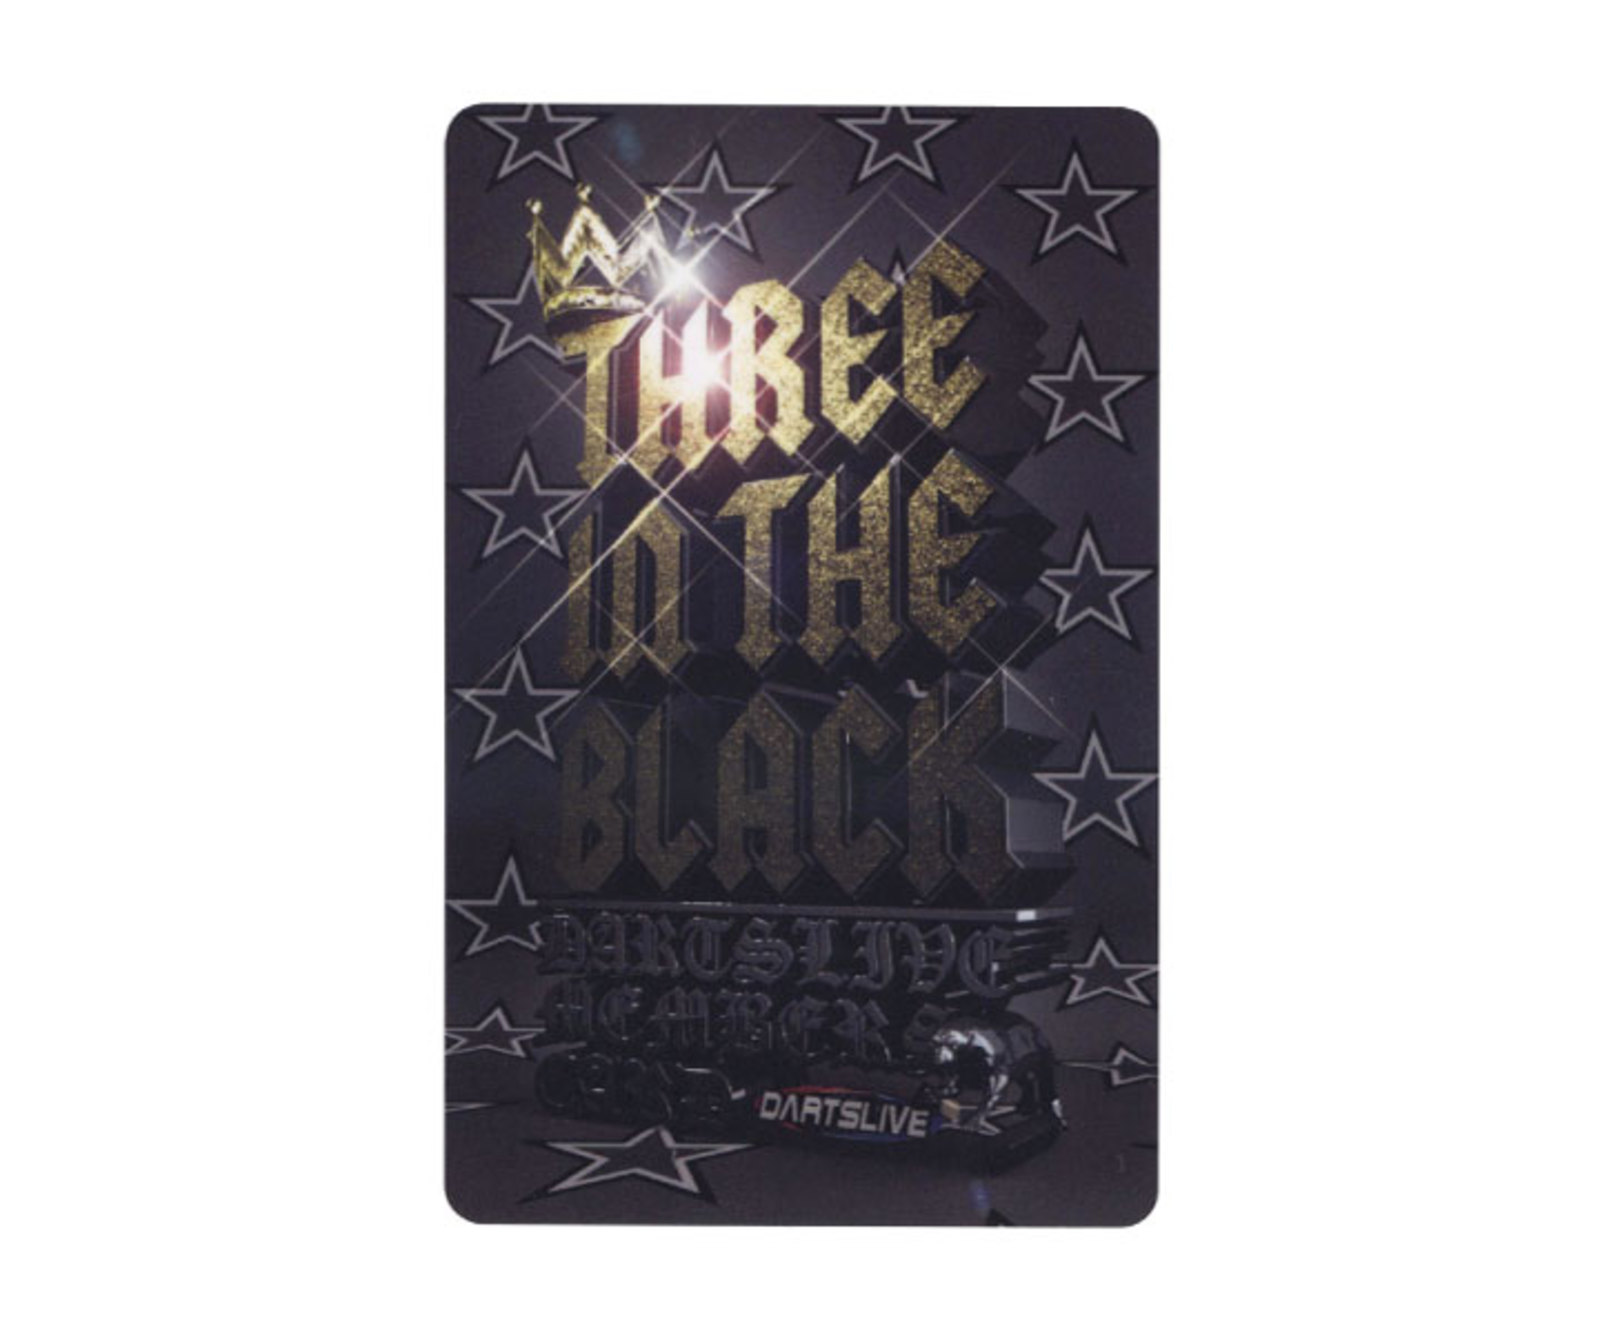 THREE IN THE BLACK セクシー ダーツライブカード - ダーツ